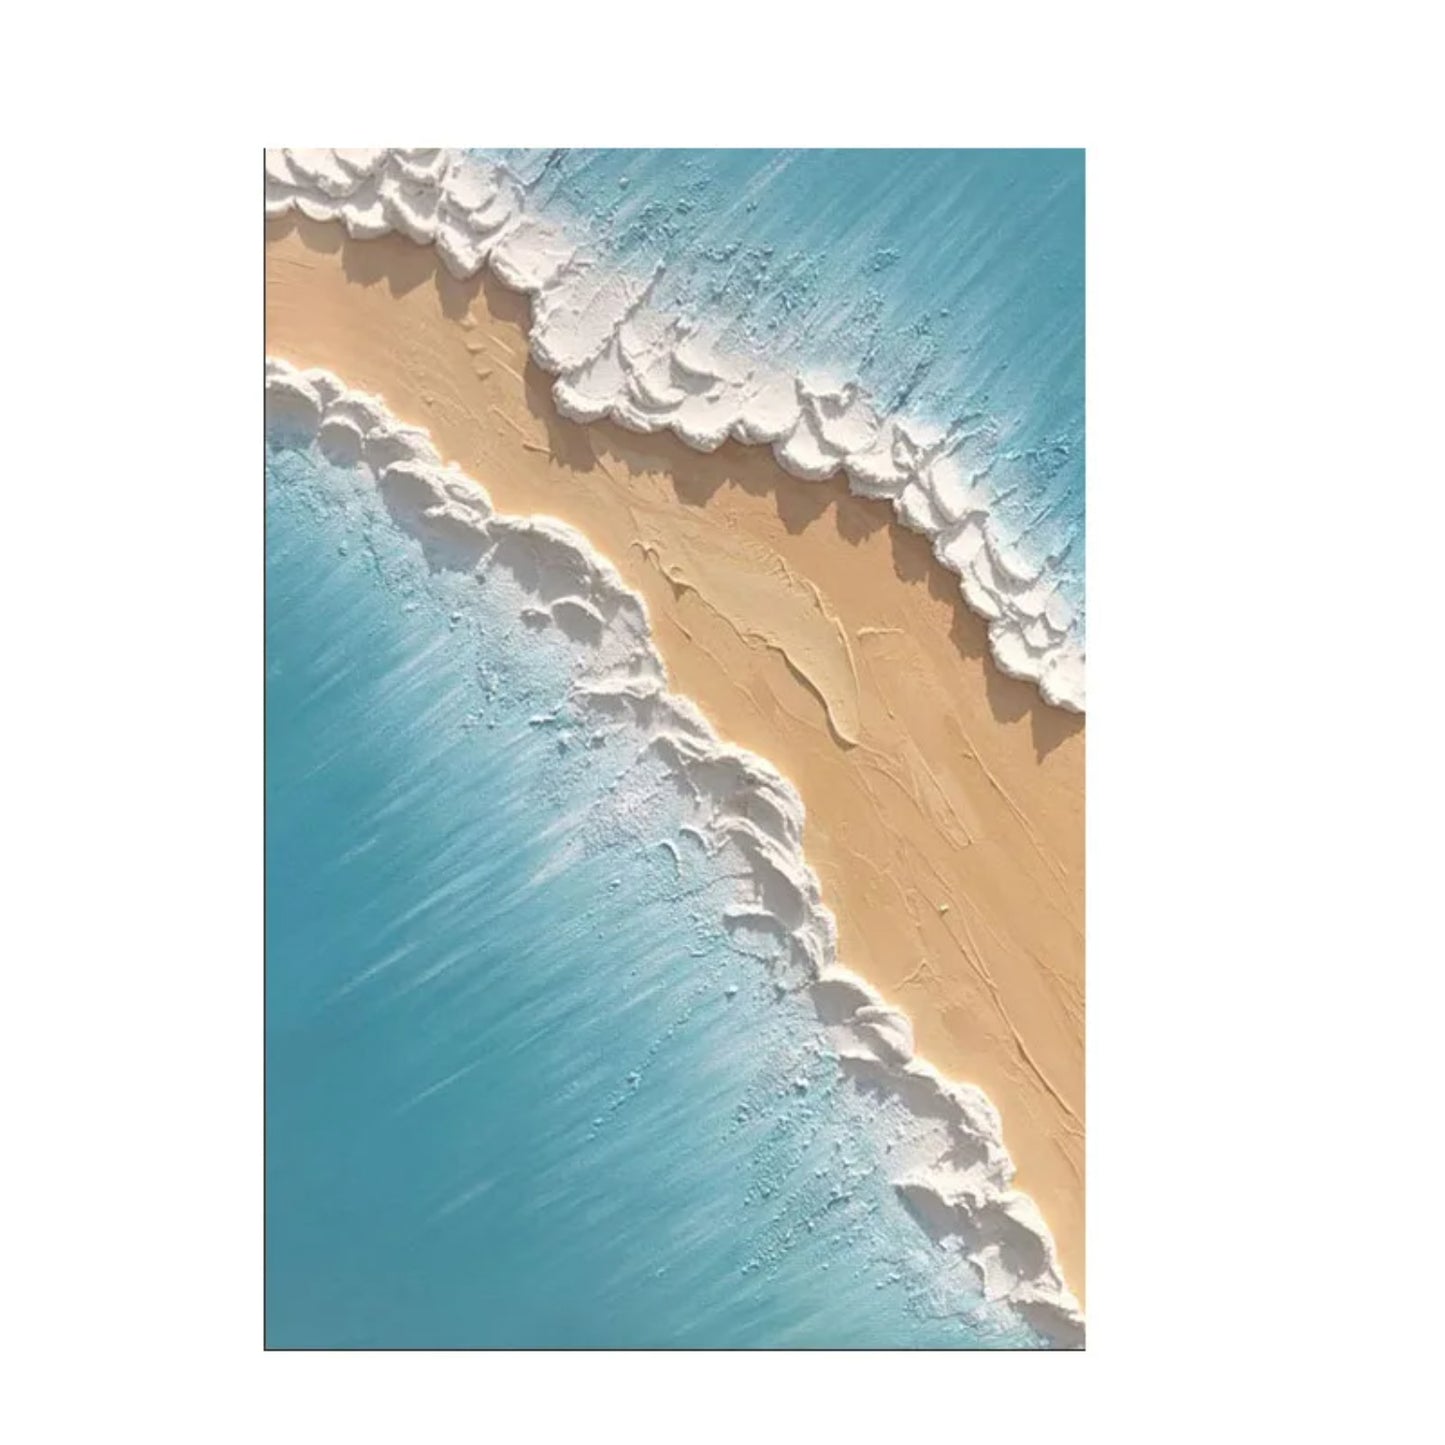 3D Thick Textured Beach Waves Abstract Knife Art